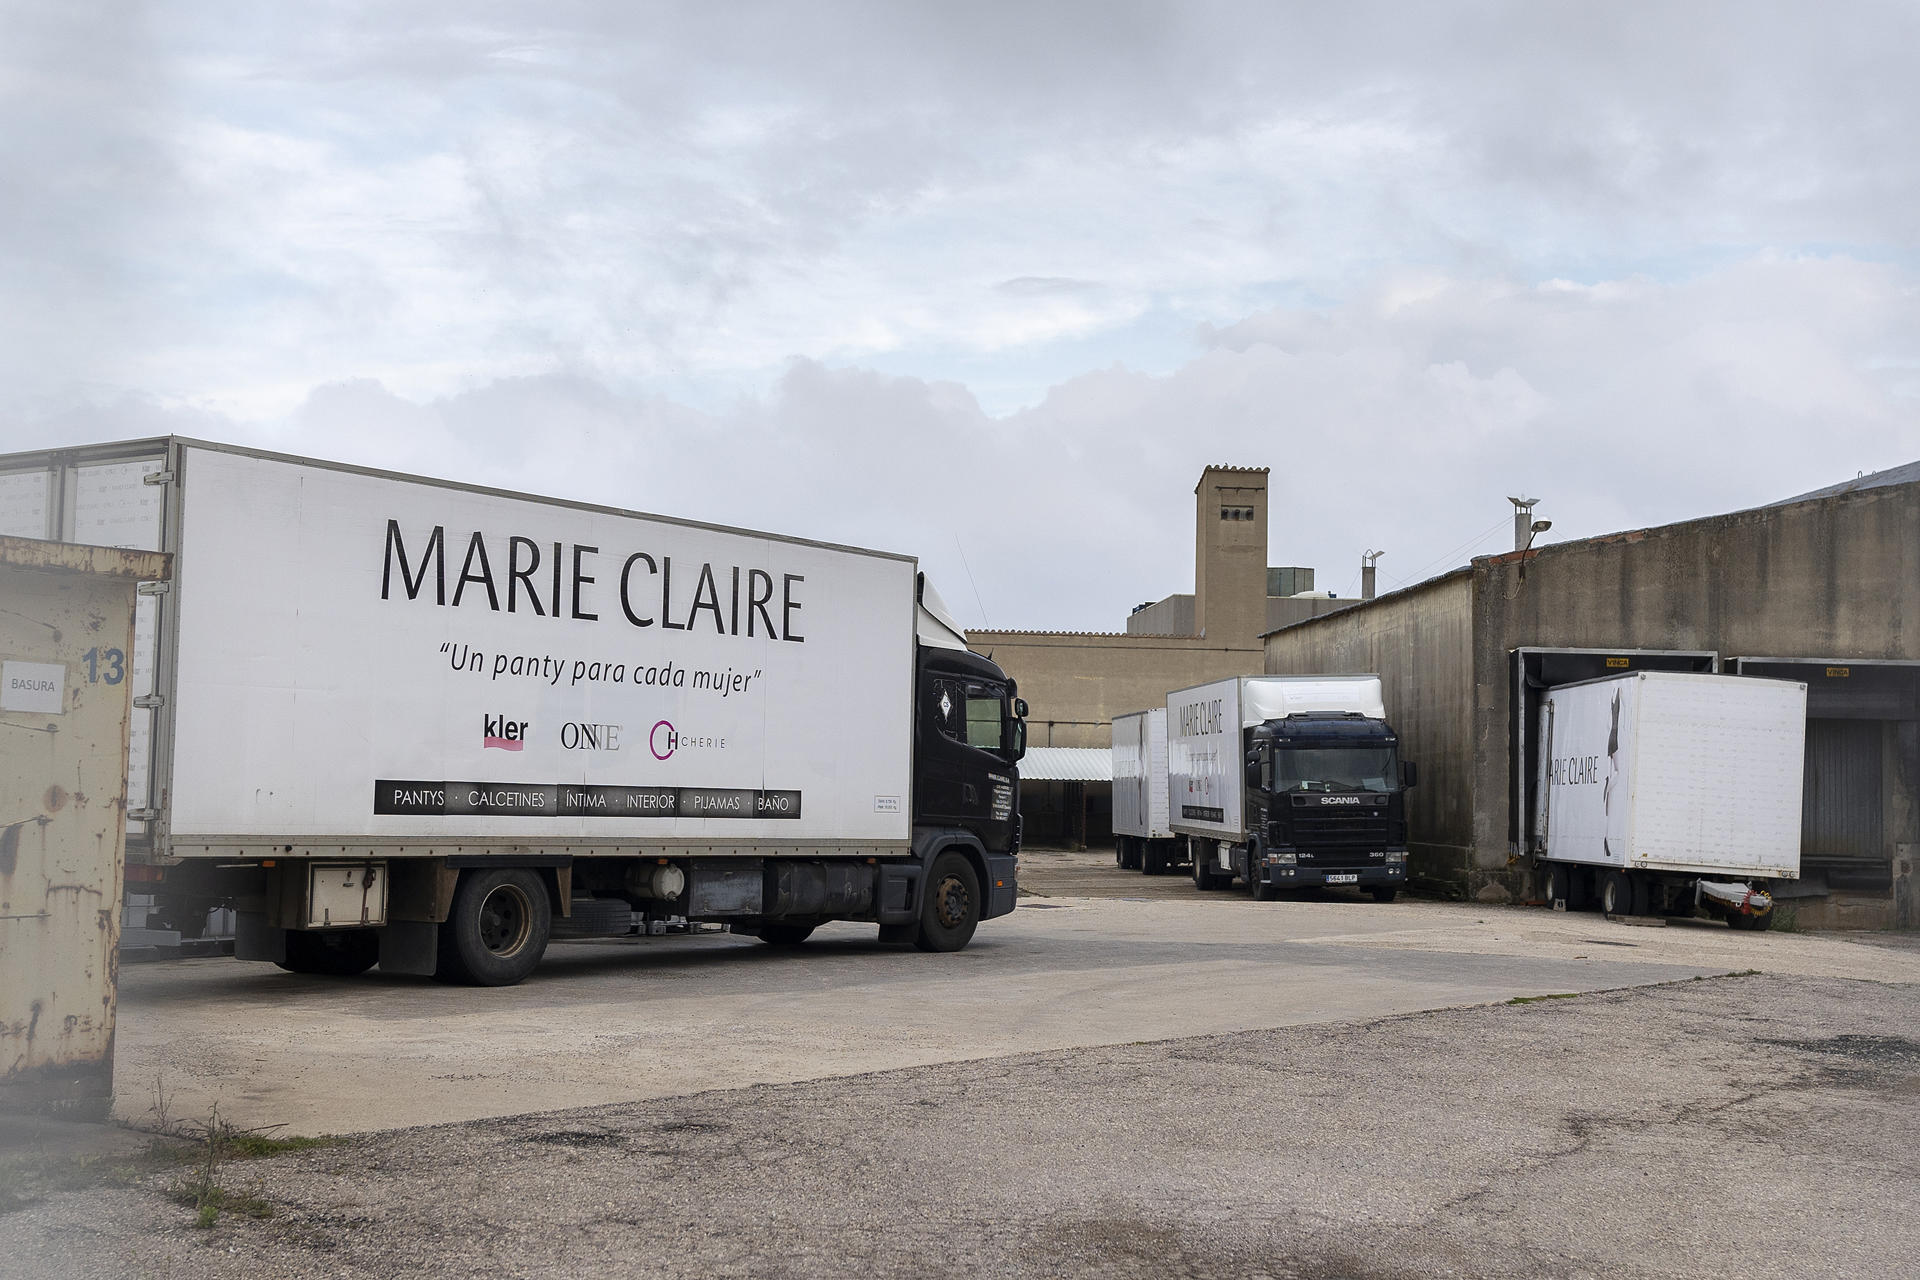 La empresa Marie Claire en una imagen de archivo.EFE/ Domenech Castelló/Archivo